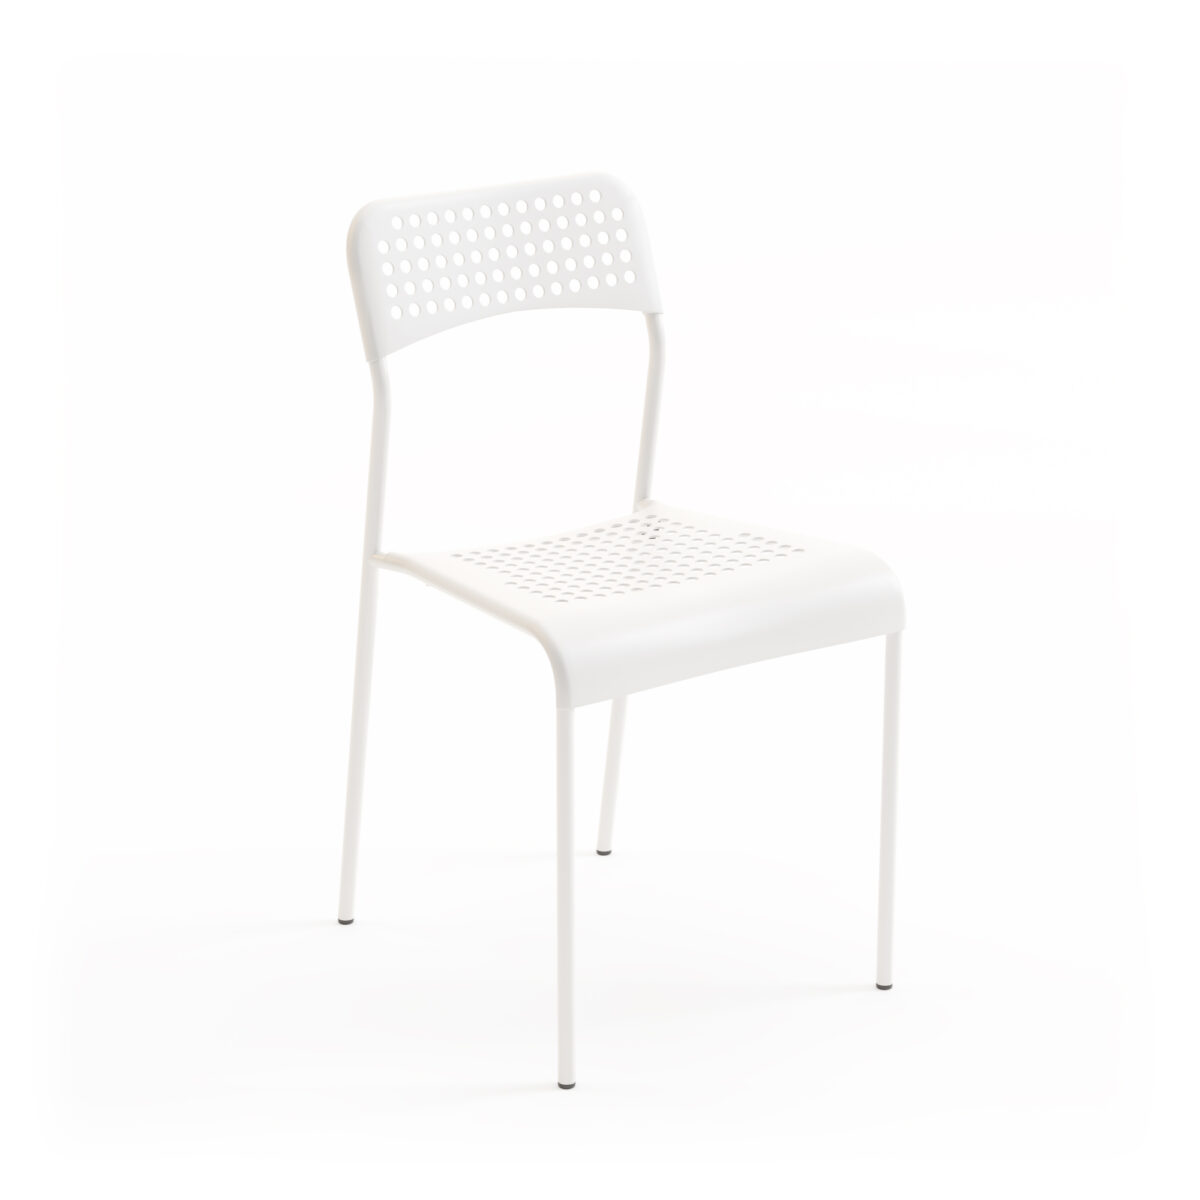 Chair IKEA ADDE 3D model dowload on cg.market for 3ds max Corona Render Vray FStorm UE Blender